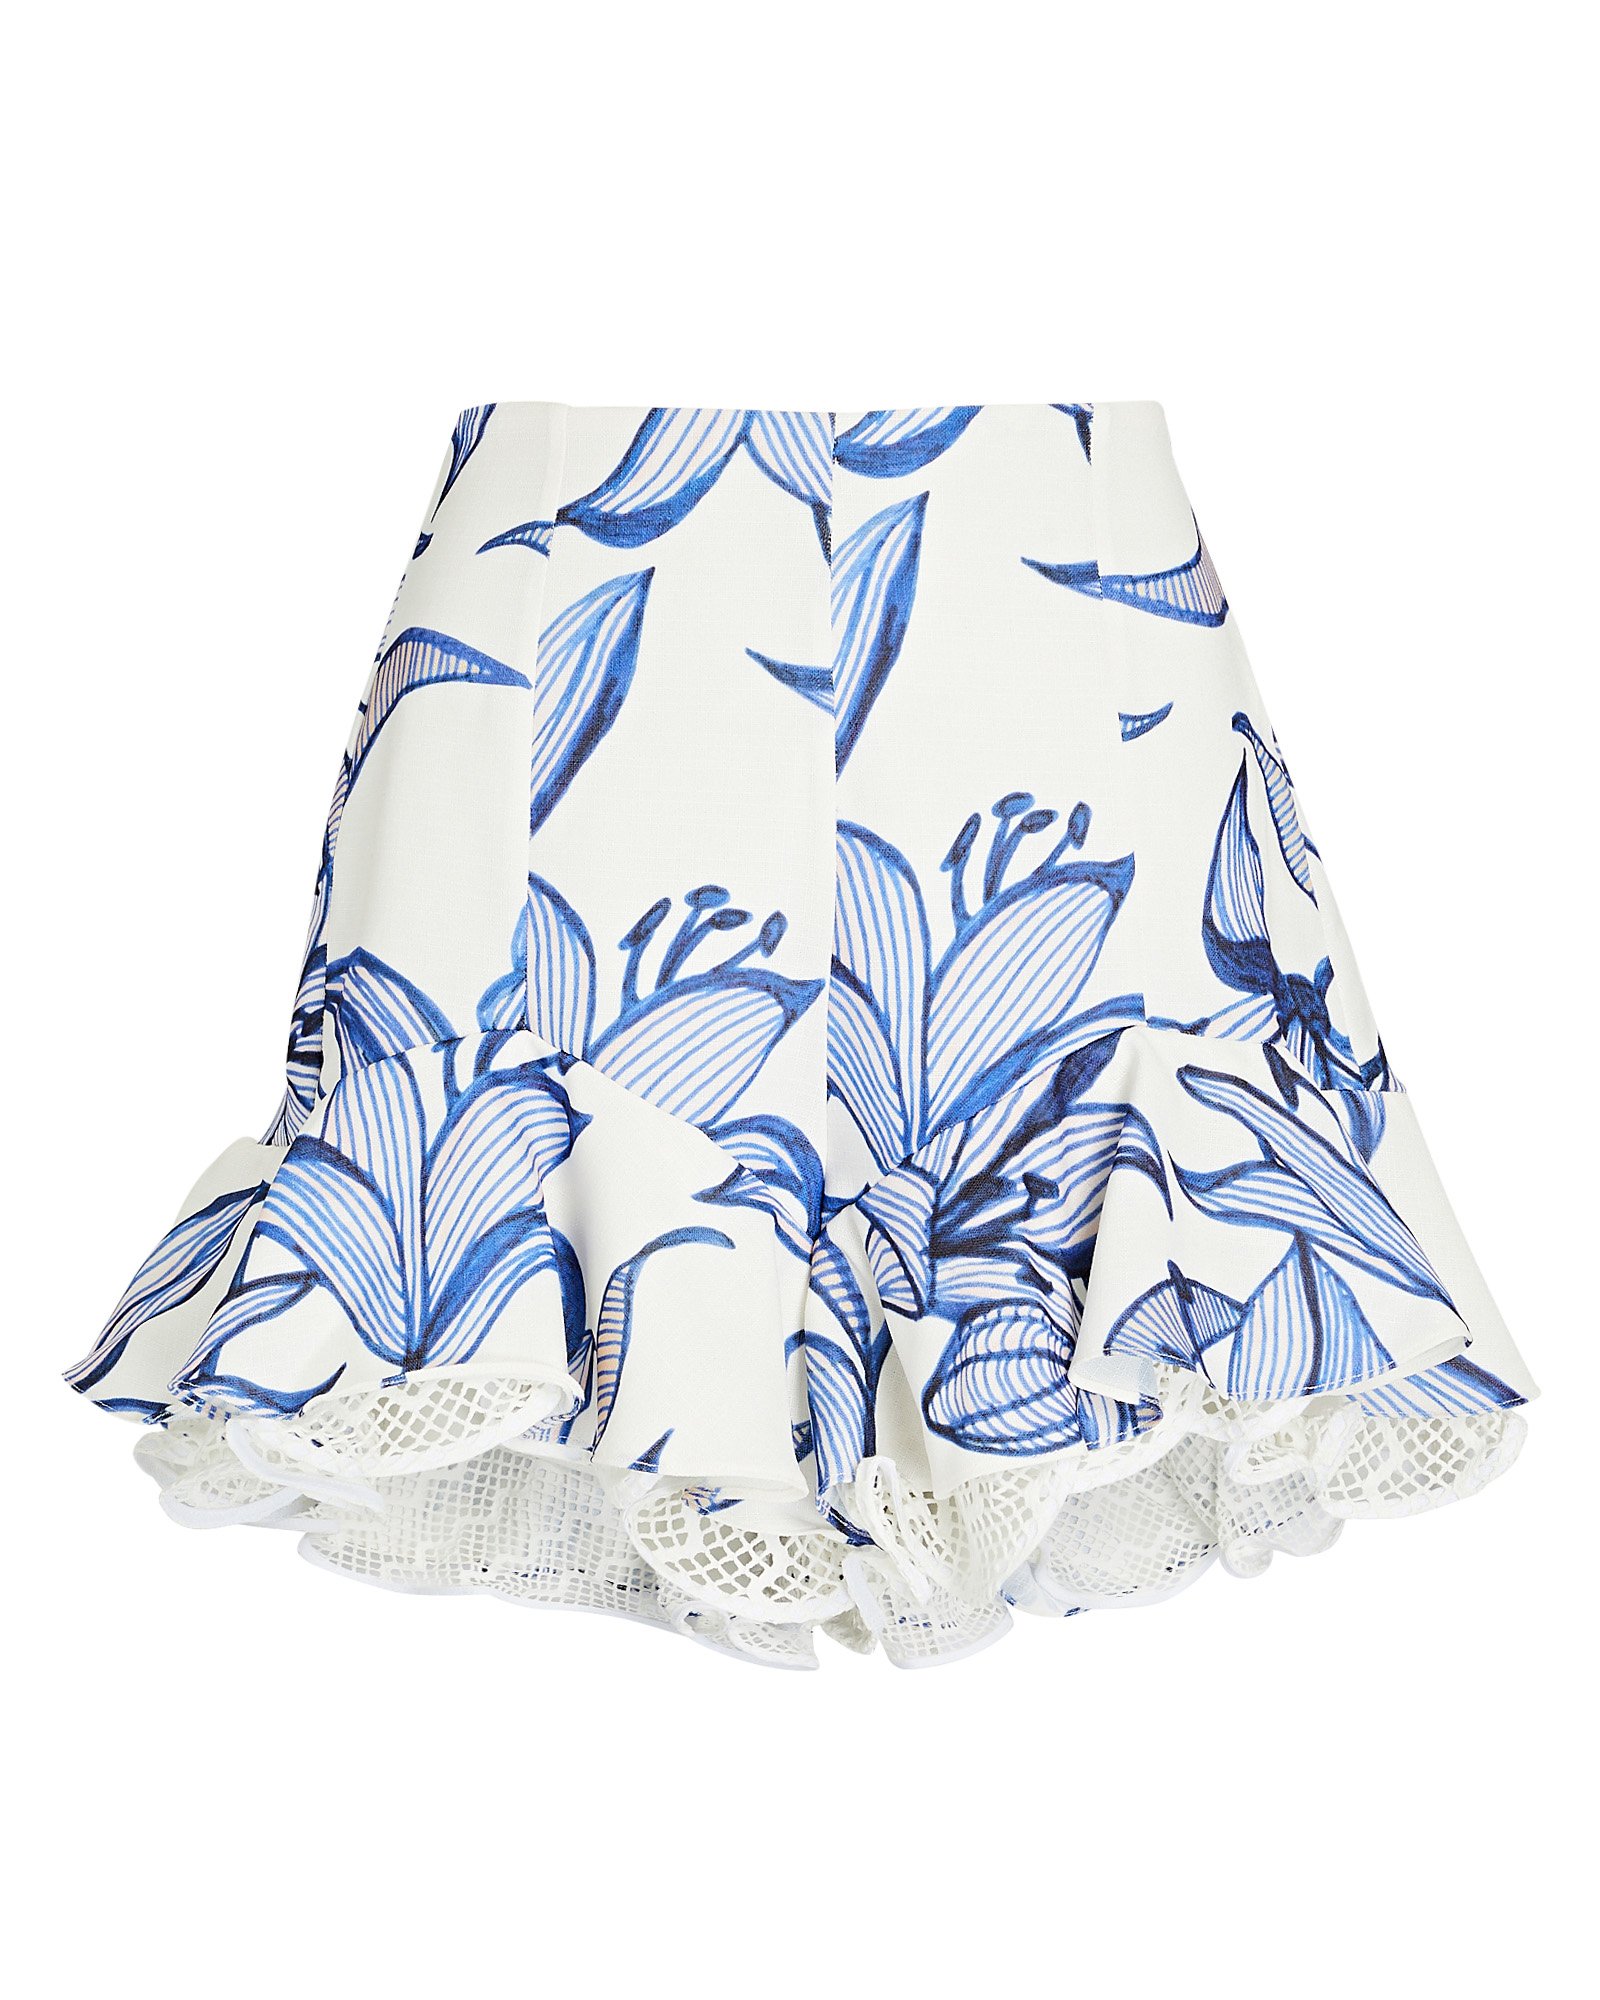 PatBO Stargazer Lace-Trimmed Floral Shorts | INTERMIX®